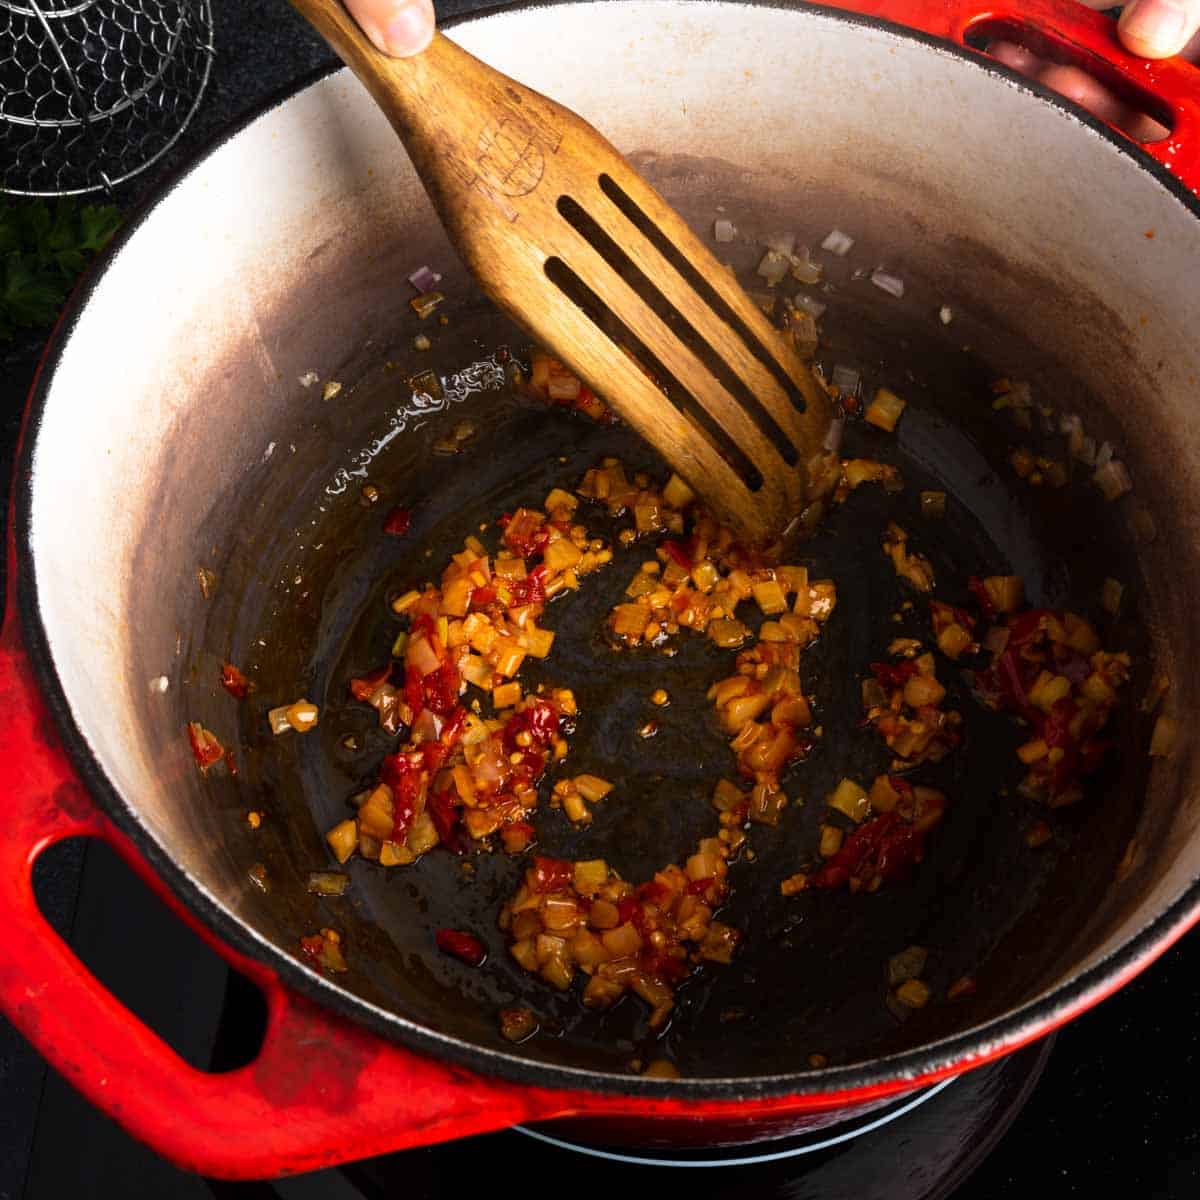 Cooking shallots, garlic and chili together